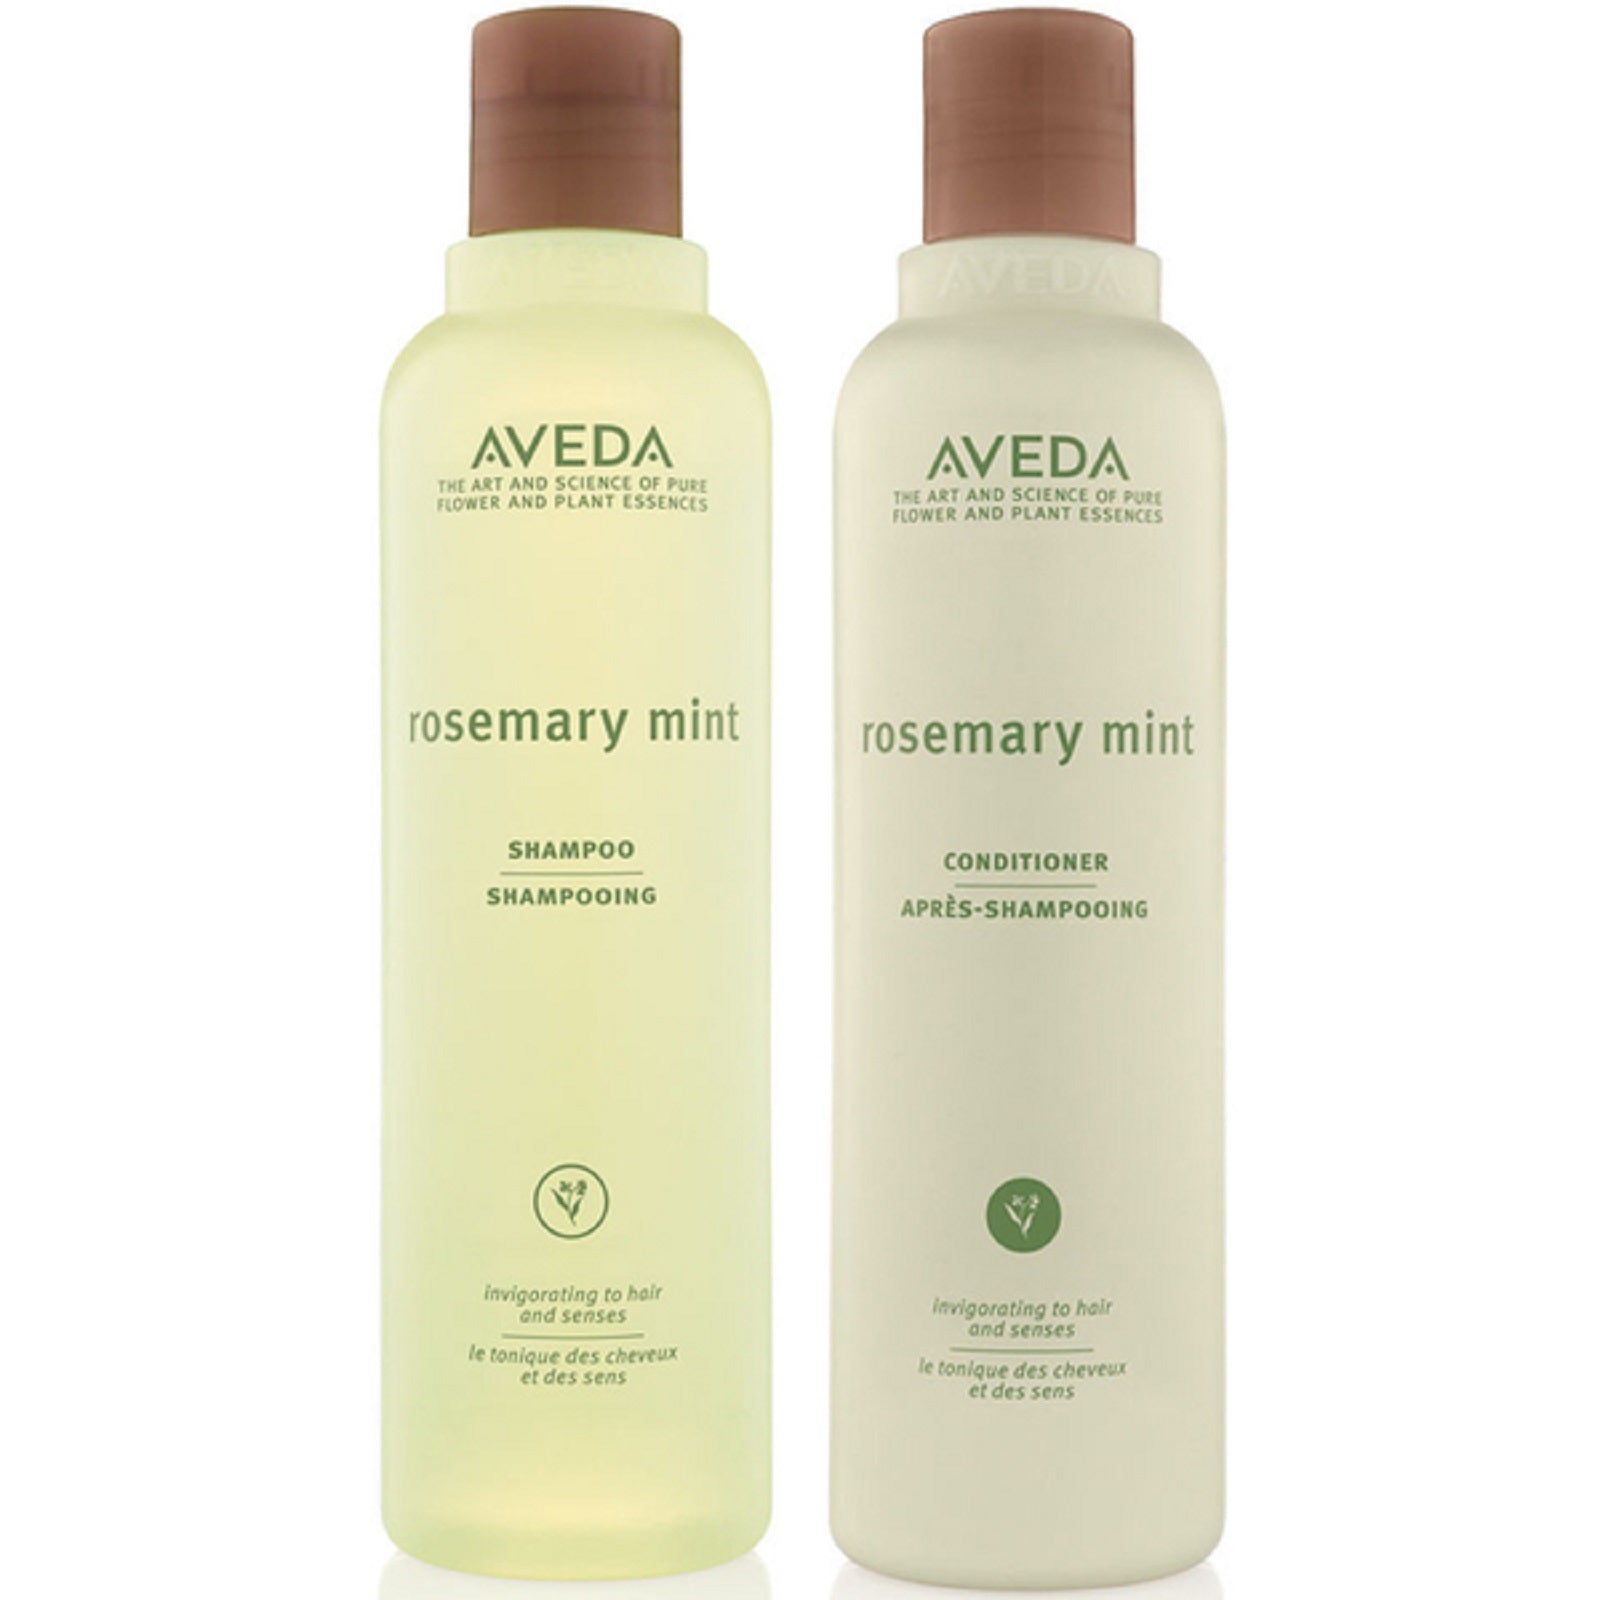 AVEDA Rosemary Mint Shampoo 8.5 oz and Conditioner 6.7 oz Duo Set